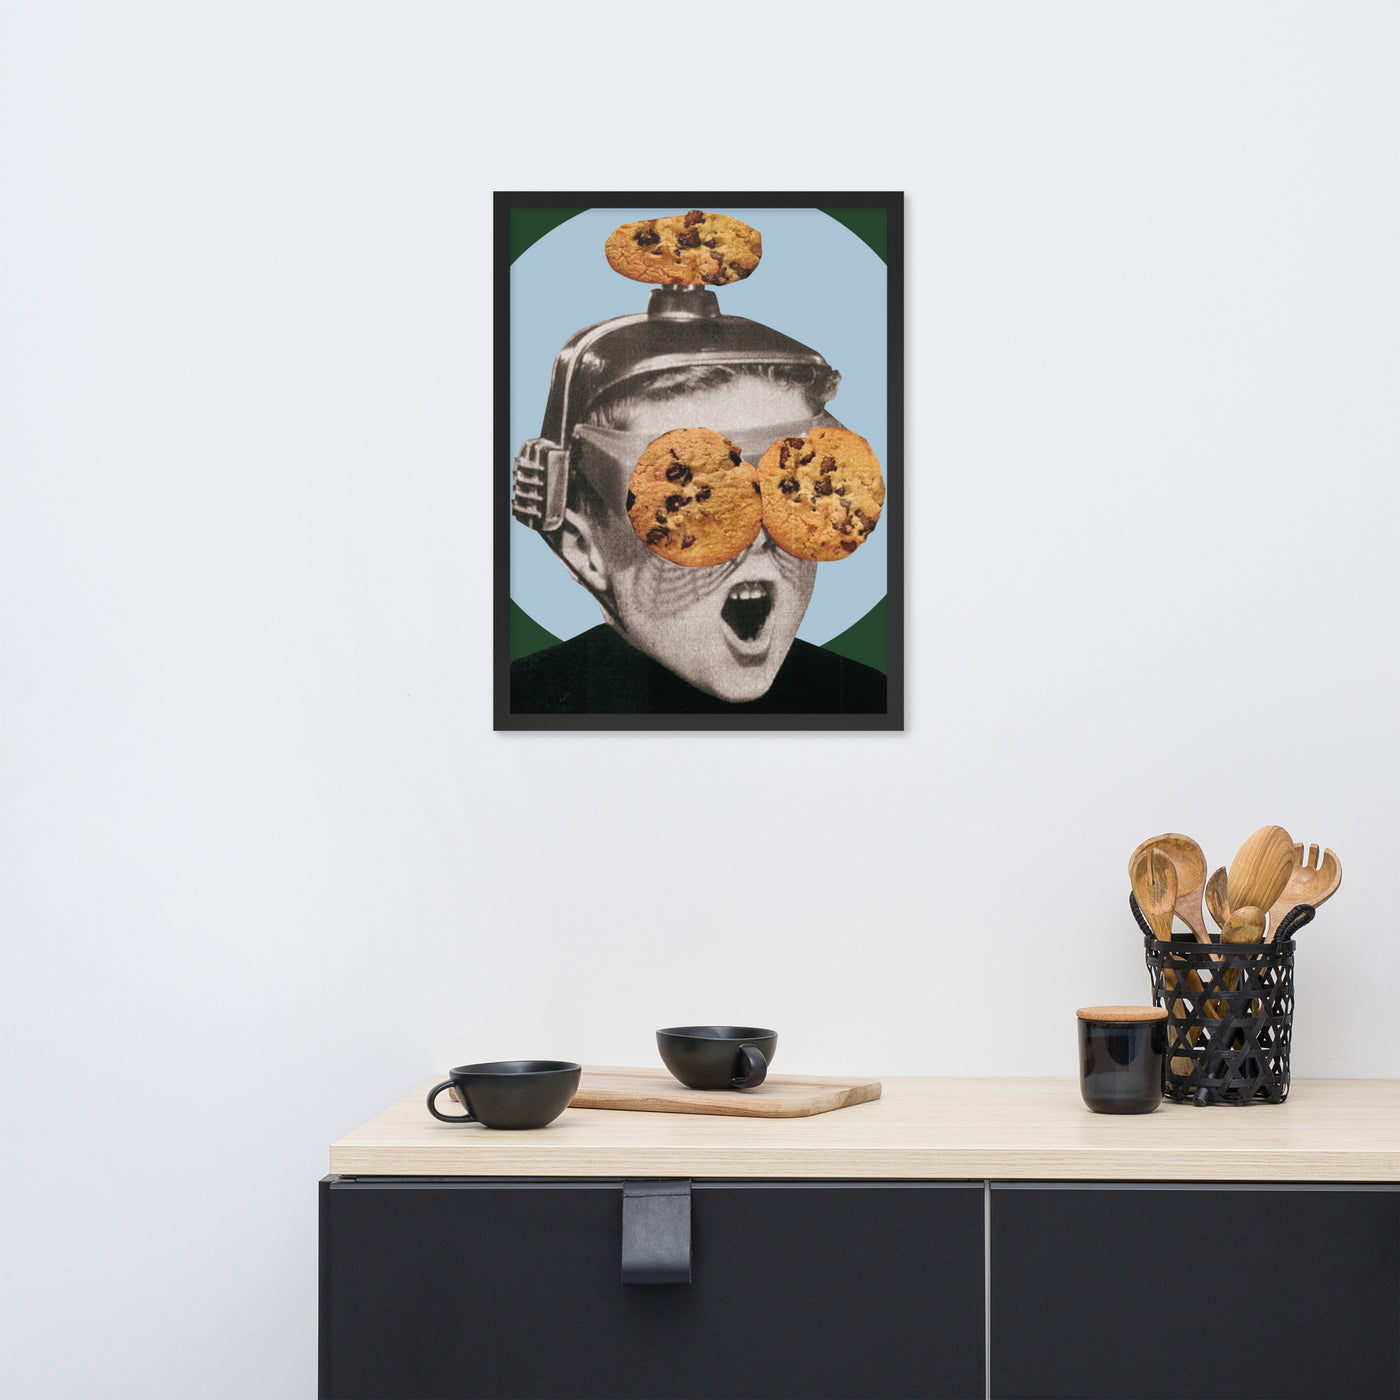 Gerahmtes Bild Kollektion "Kitchen Art" - Cookie Welt